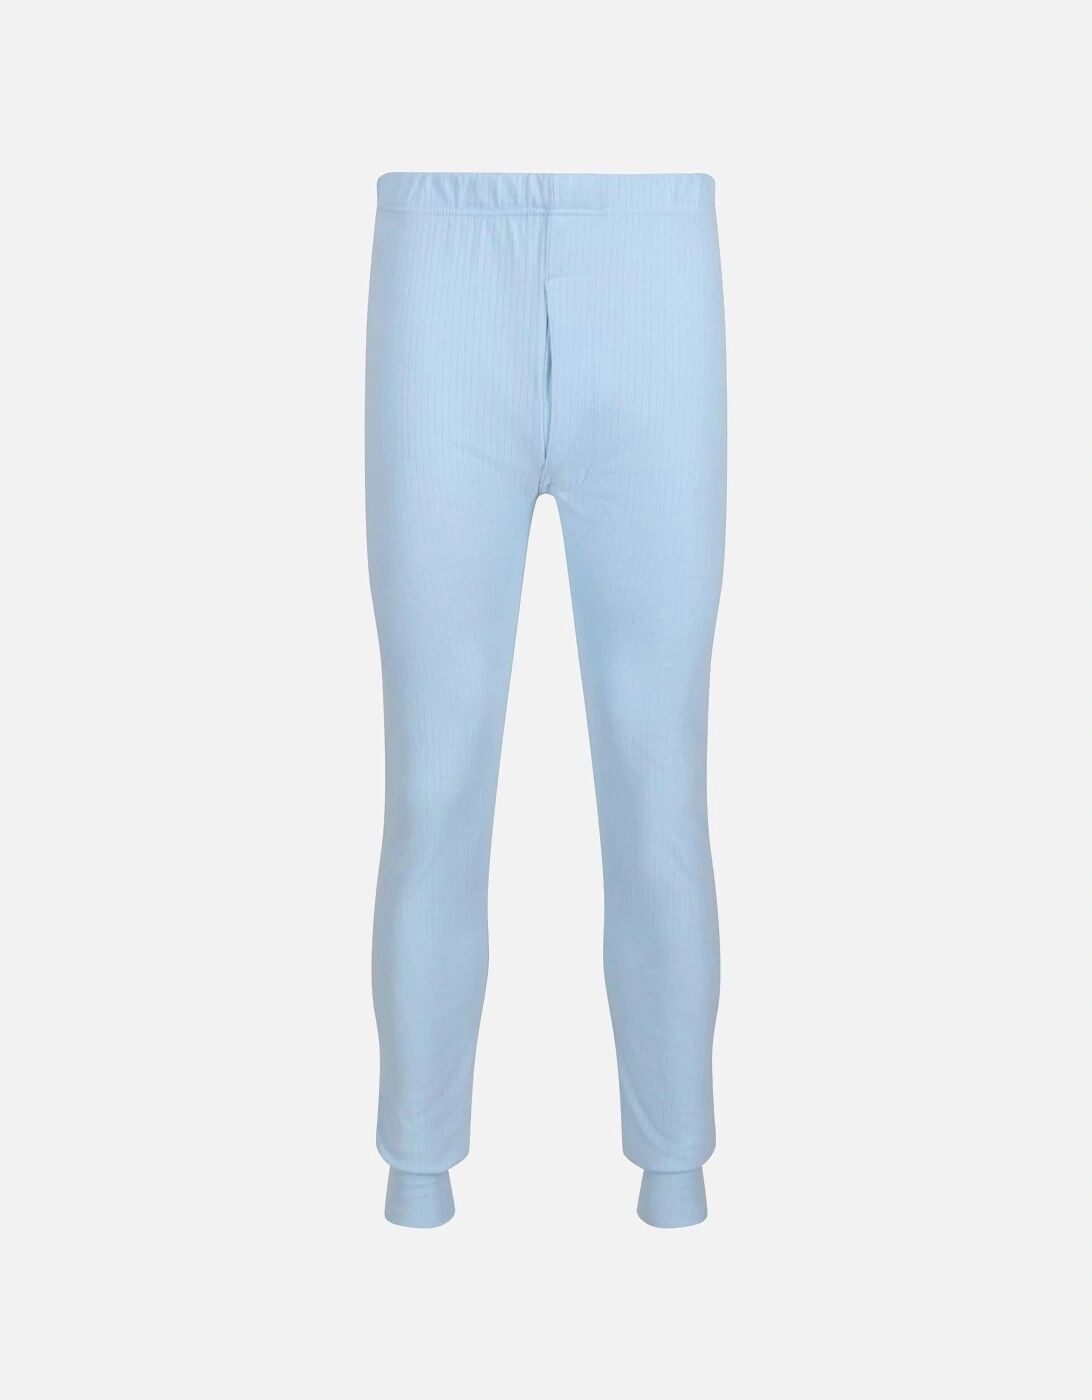 Men's Regatta Mens Thermal Underwear Long Johns - Blue - Size: 5/5.5/6.5/7/6/7.5